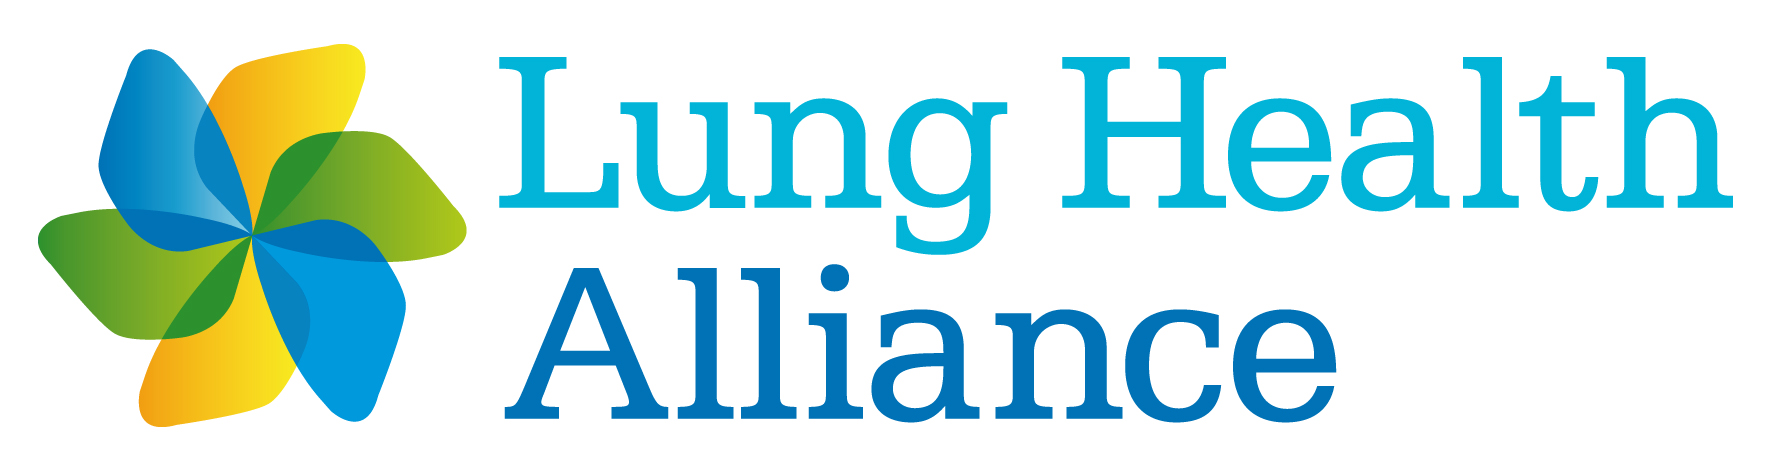 Lung Health Alliance logo